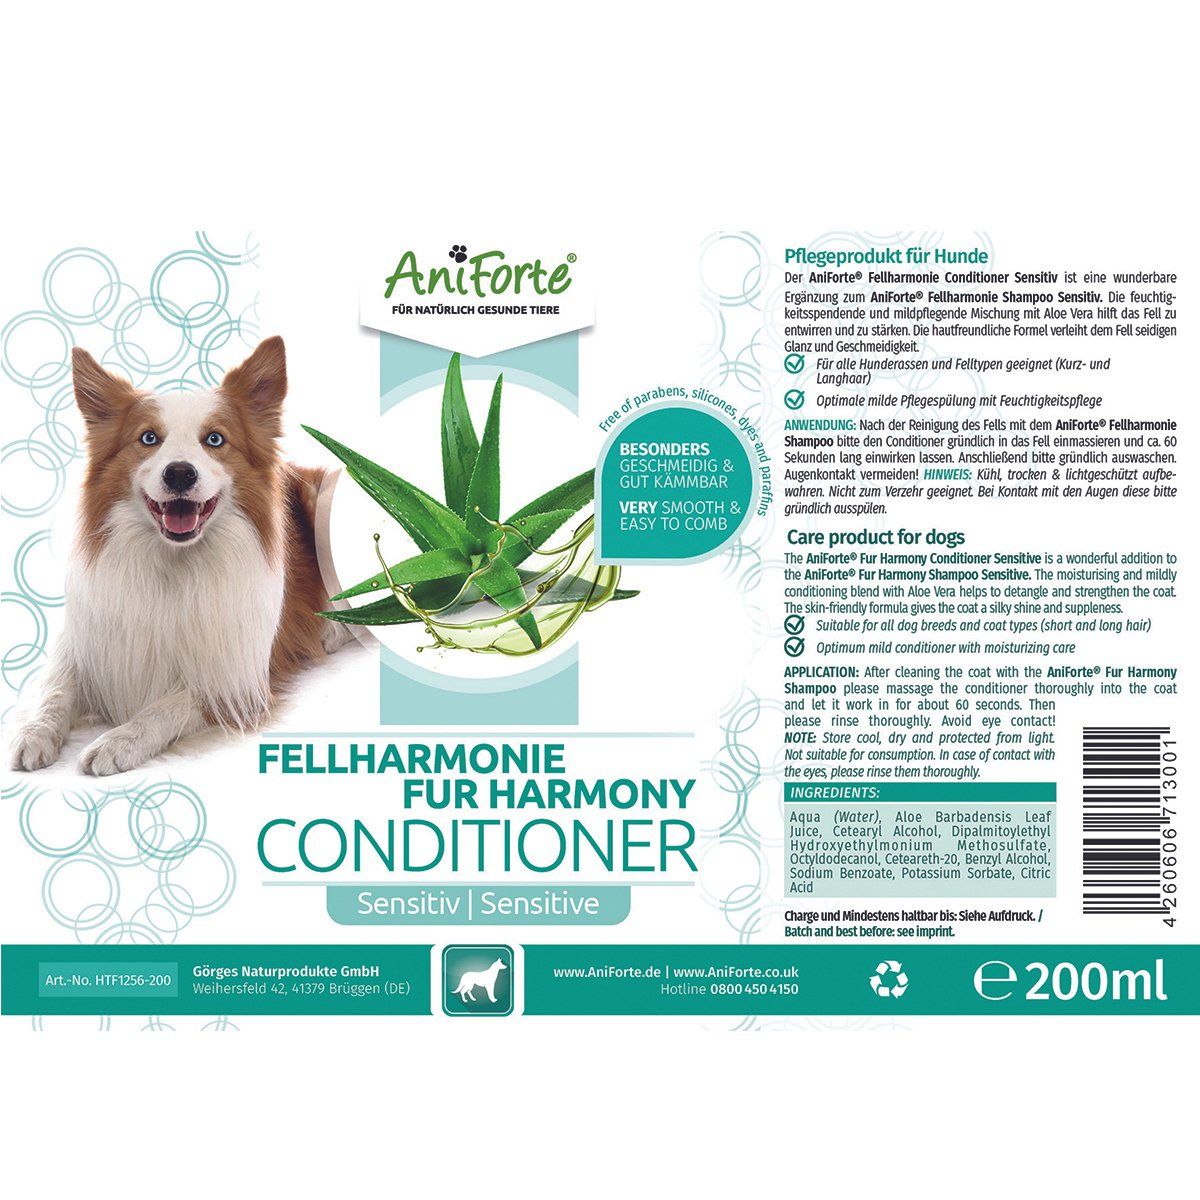 Fur Harmony Sensitive Conditioner for Dogs - 200ml - AniForte UK